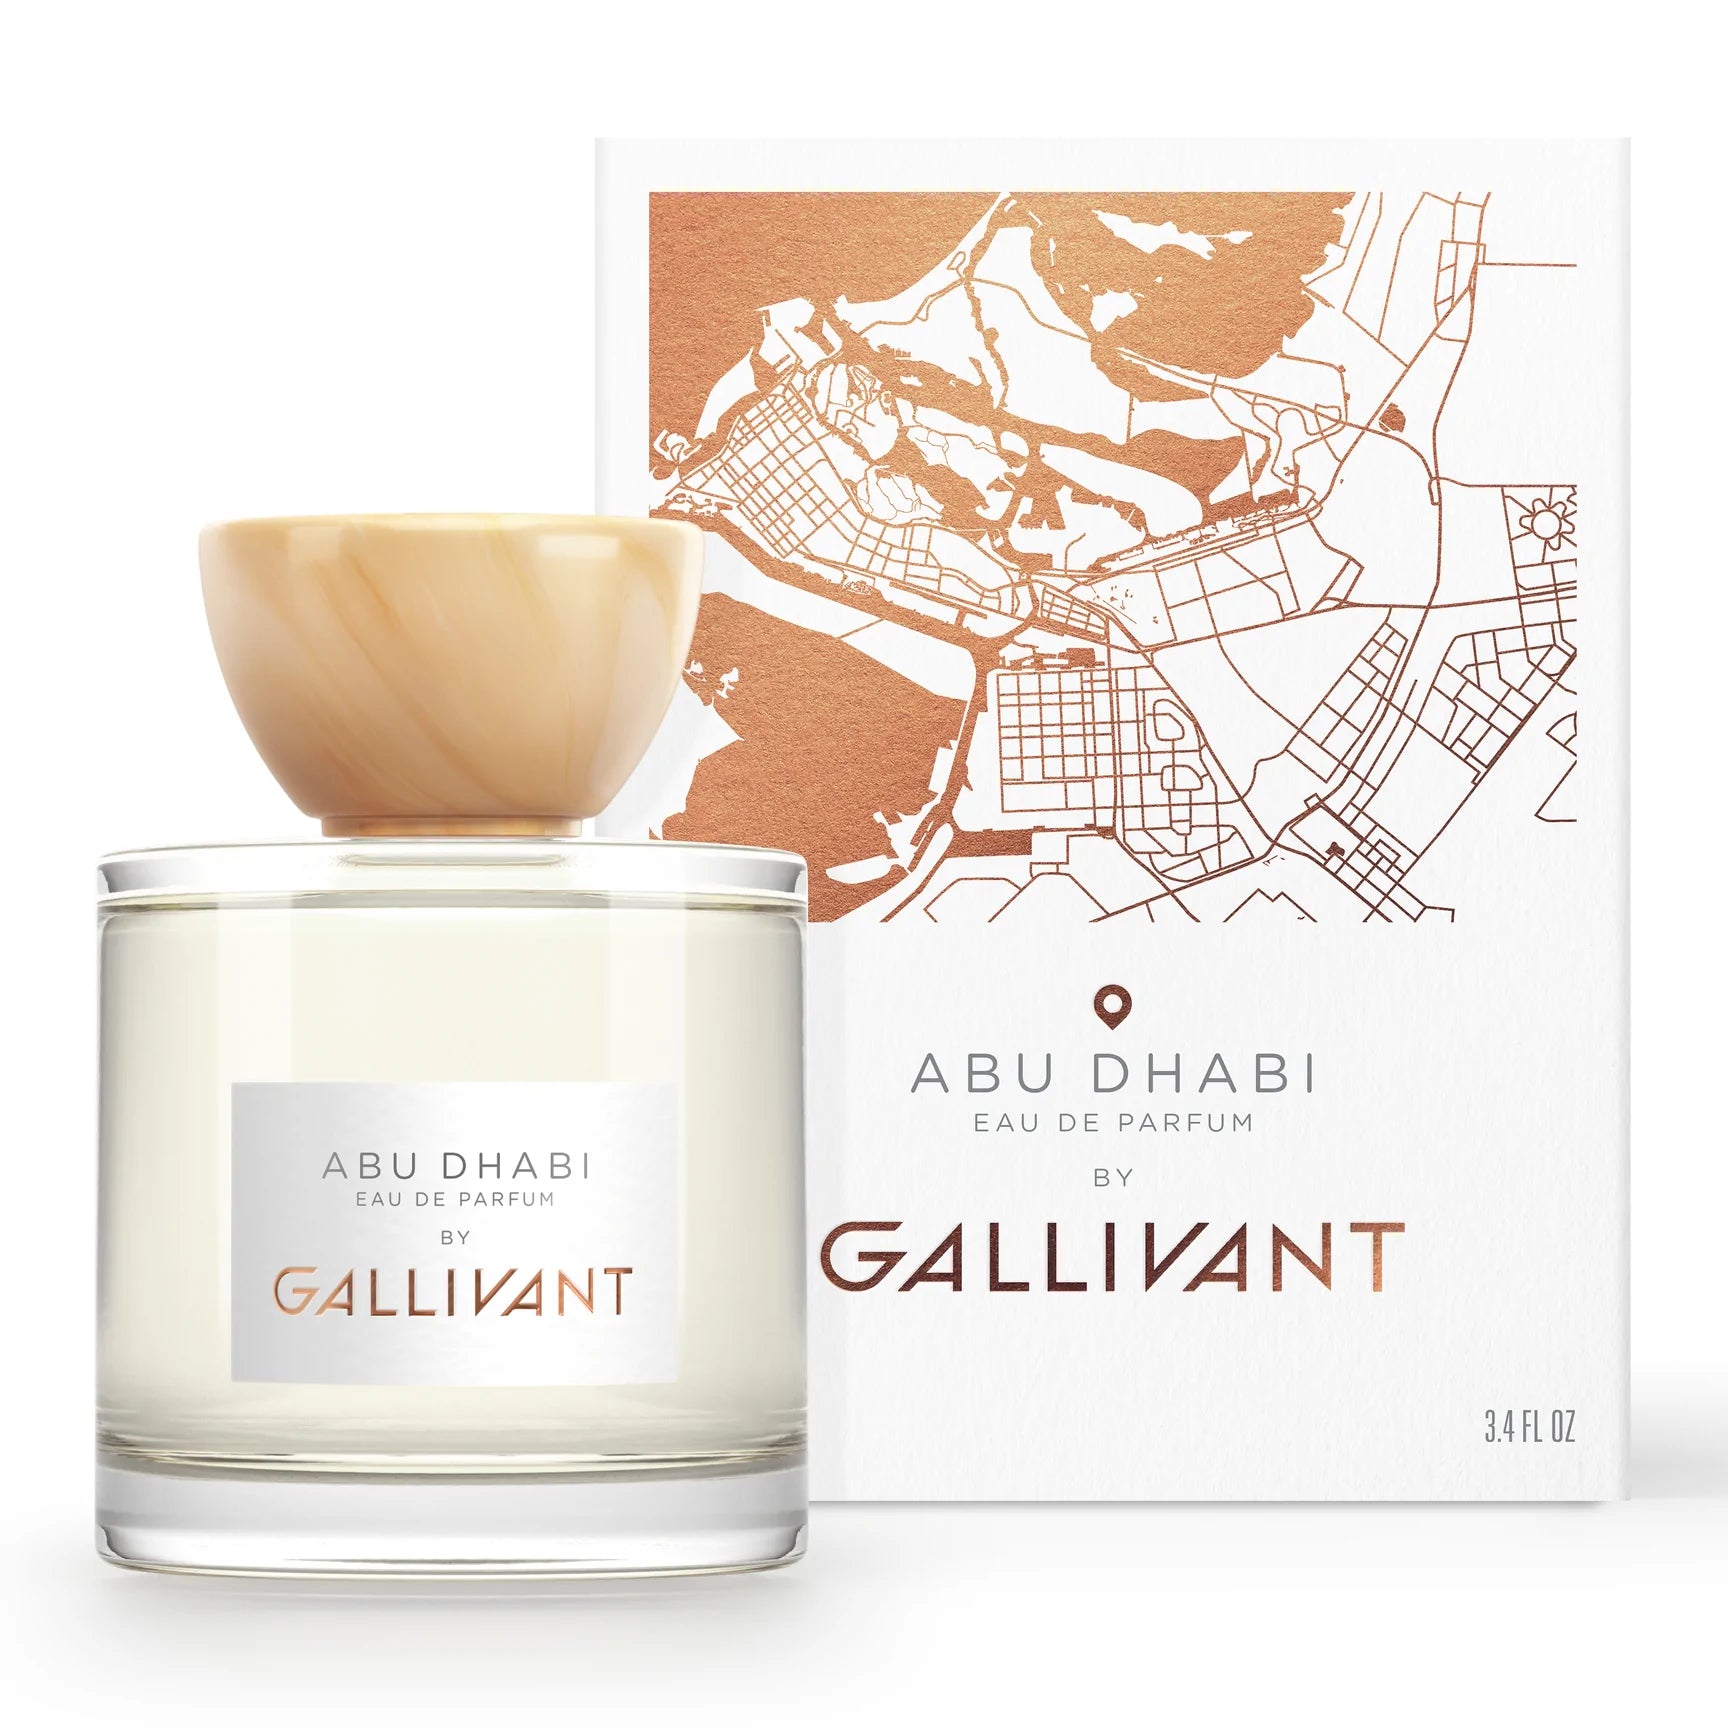 Abu Dhabi 100ml Eau de Parfum Bottle and Box by Gallivant